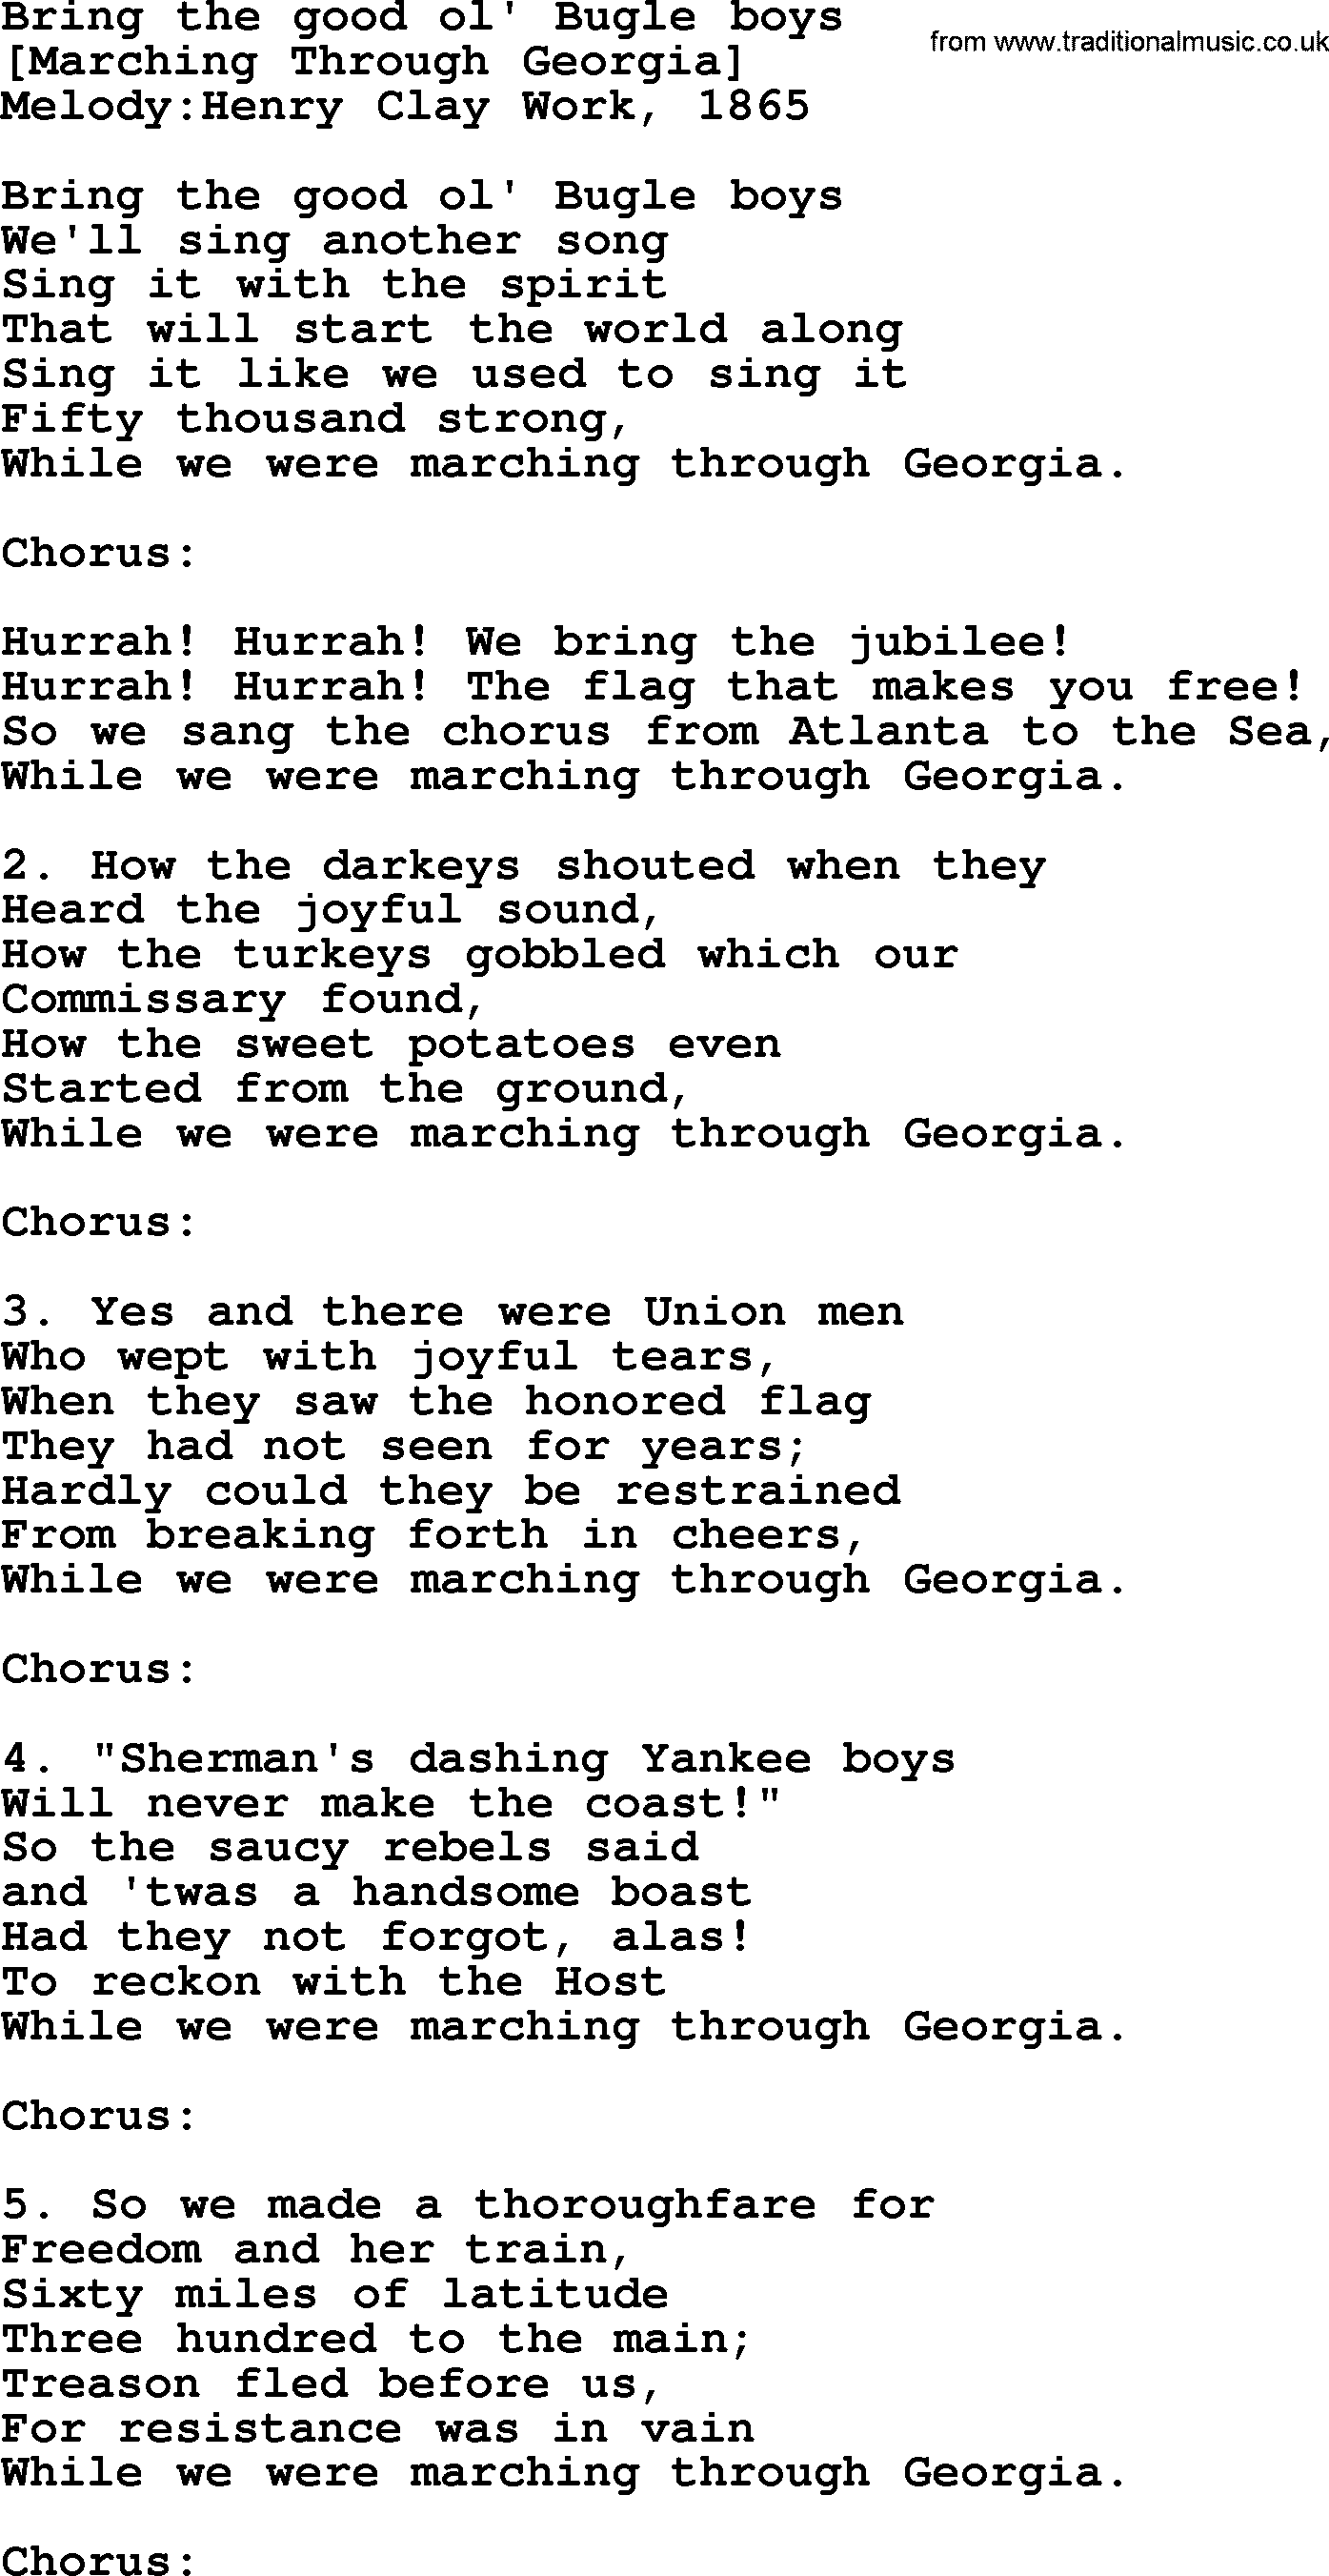 Old American Song: Bring The Good Ol' Bugle Boys, lyrics